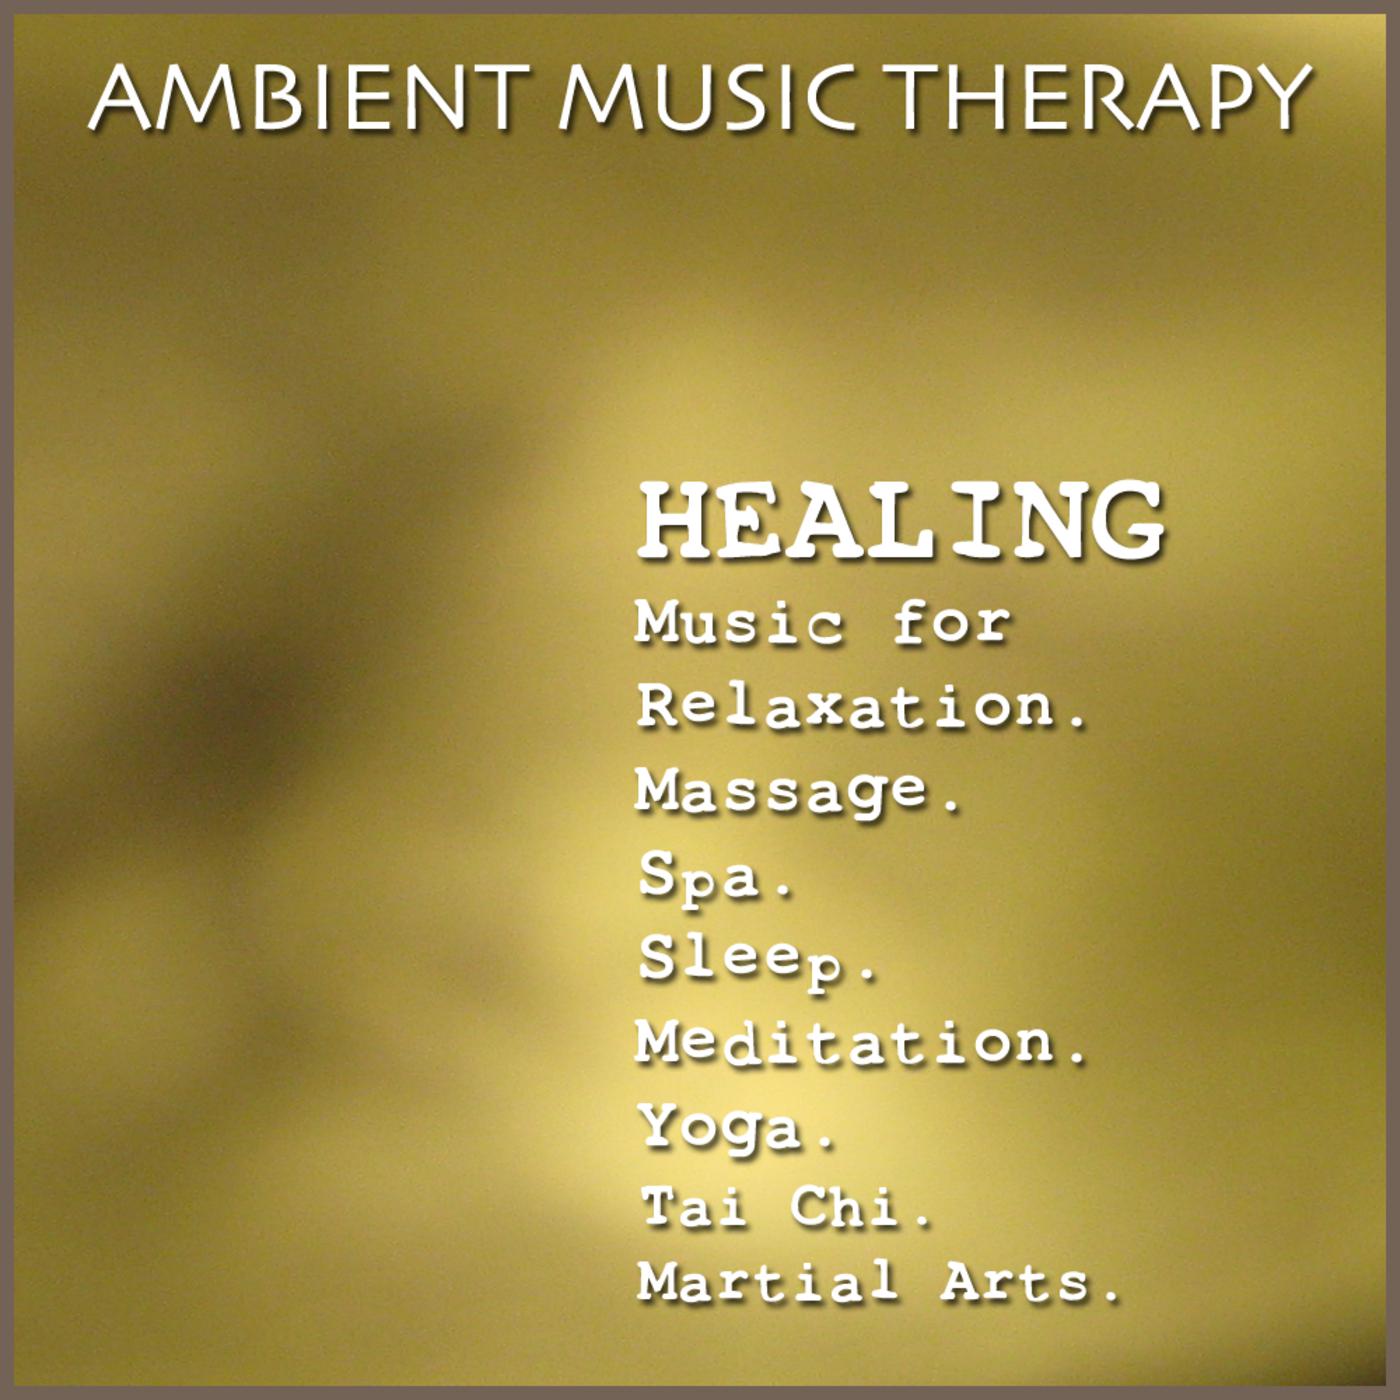 Healing Music for Relaxation. Massage. Spa. Sleep. Meditation. Yoga. Tai Chi. Martial Arts.